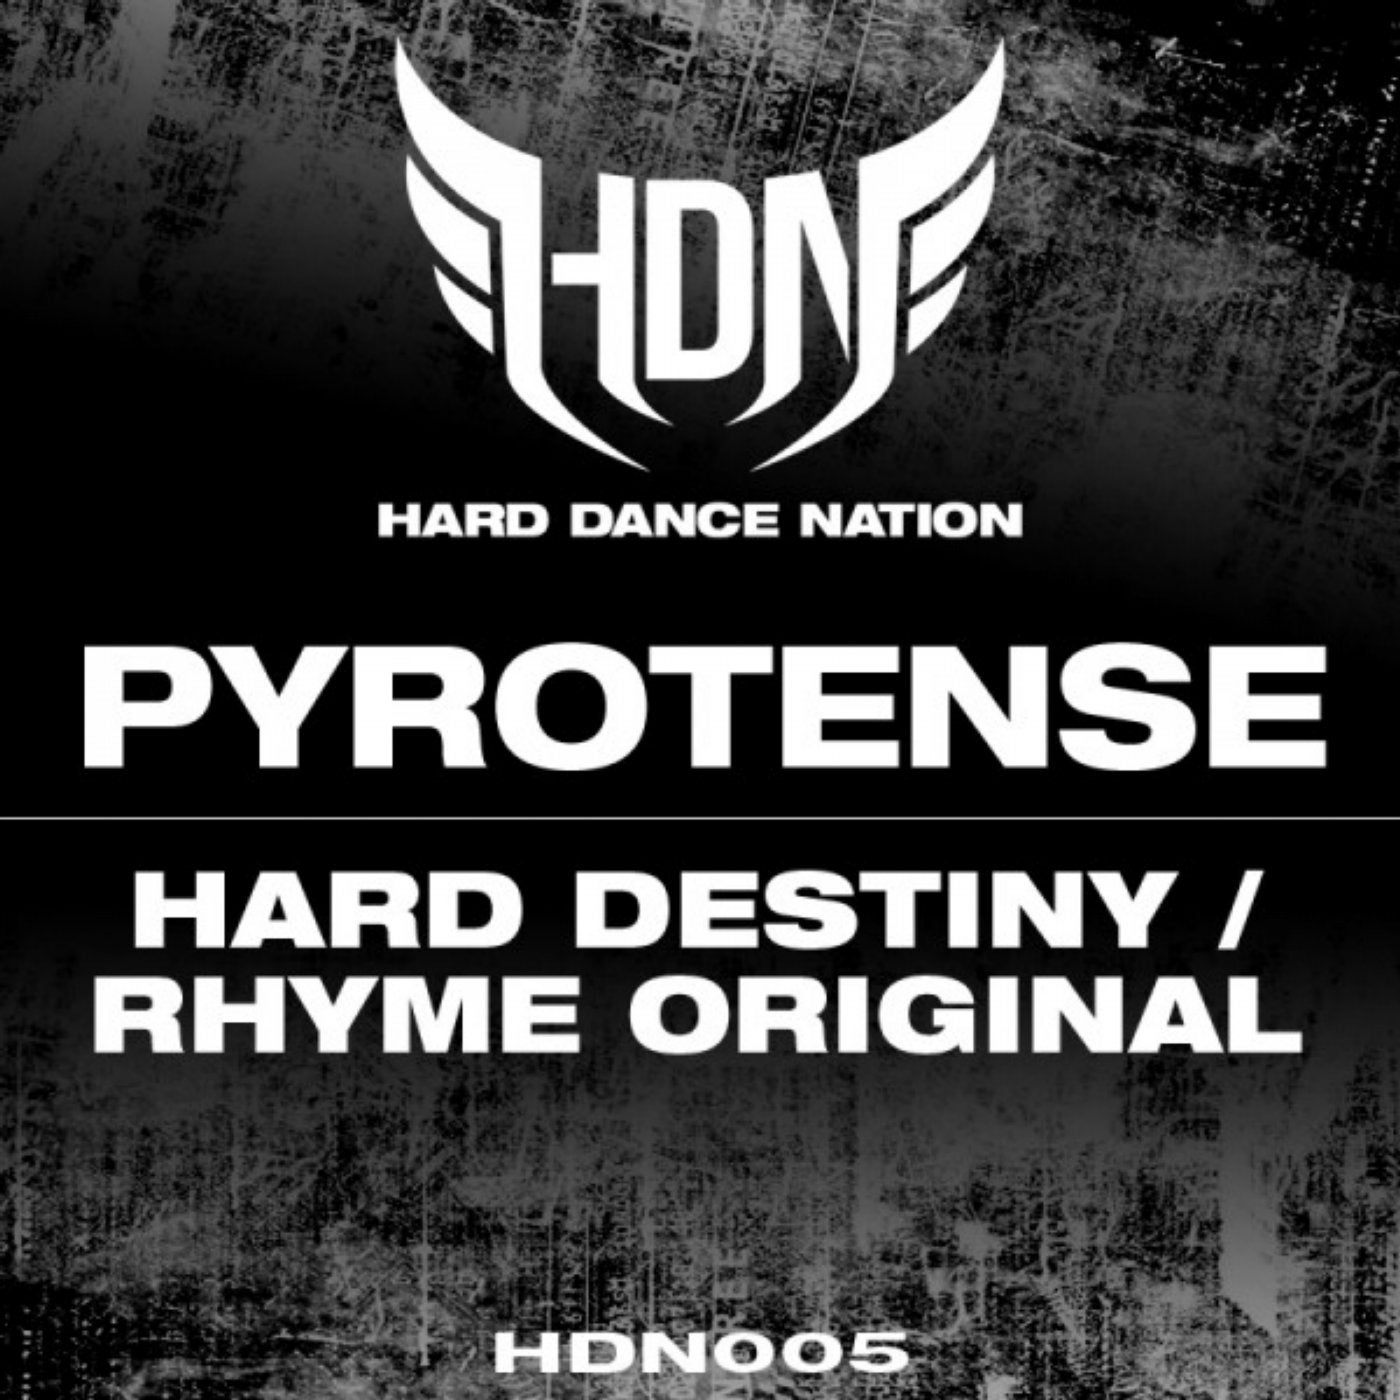 Hard Destiny / Rhyme Original